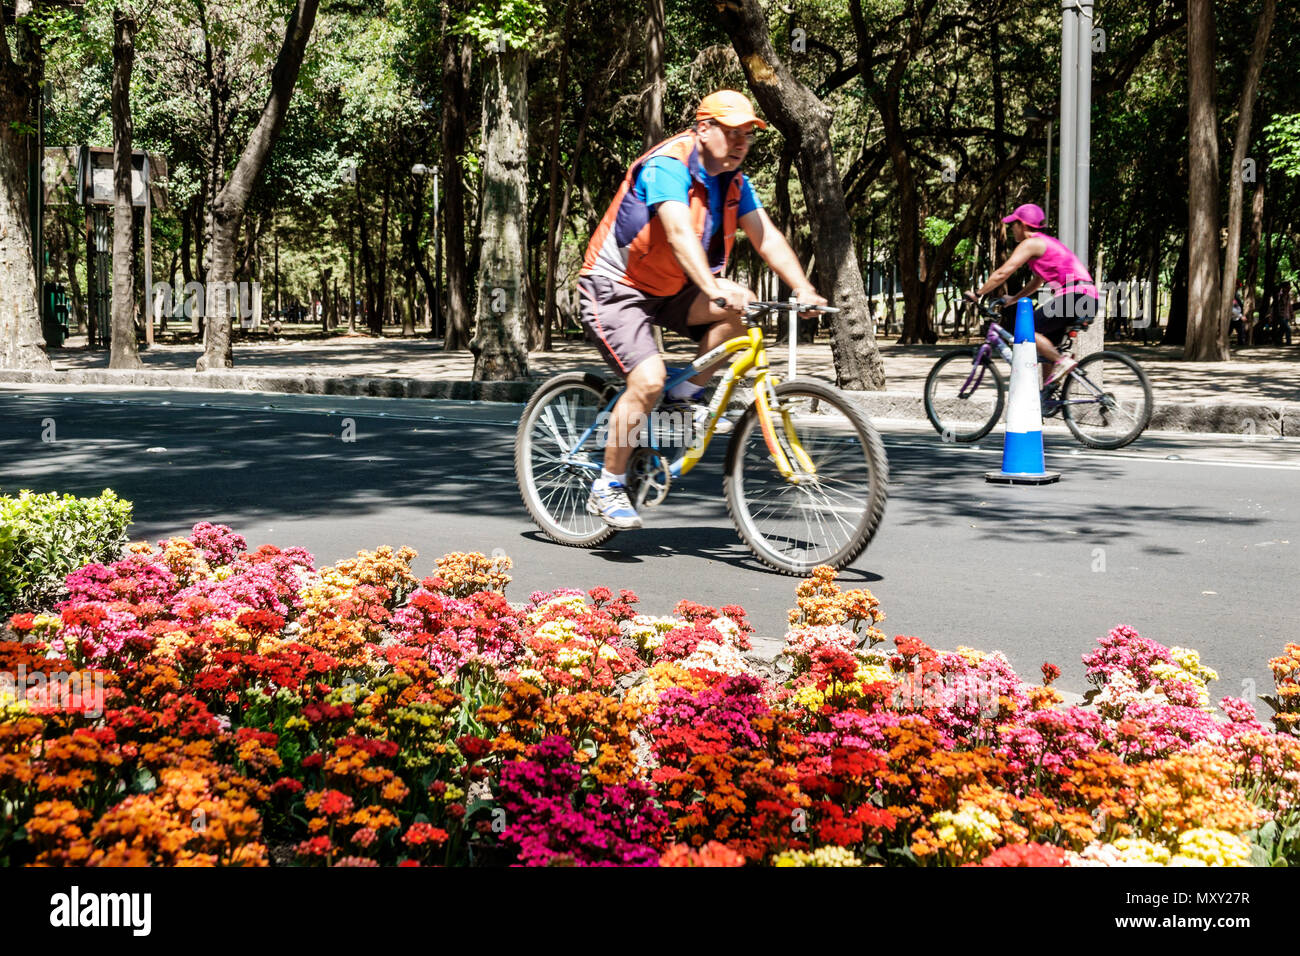 Mexico, mexicain, hispanique latin Latino ethnique, Bosque de Chapultepec forêt, Paseo la Reforma, vélo vélos vélos vélo vélo équitation biki Banque D'Images